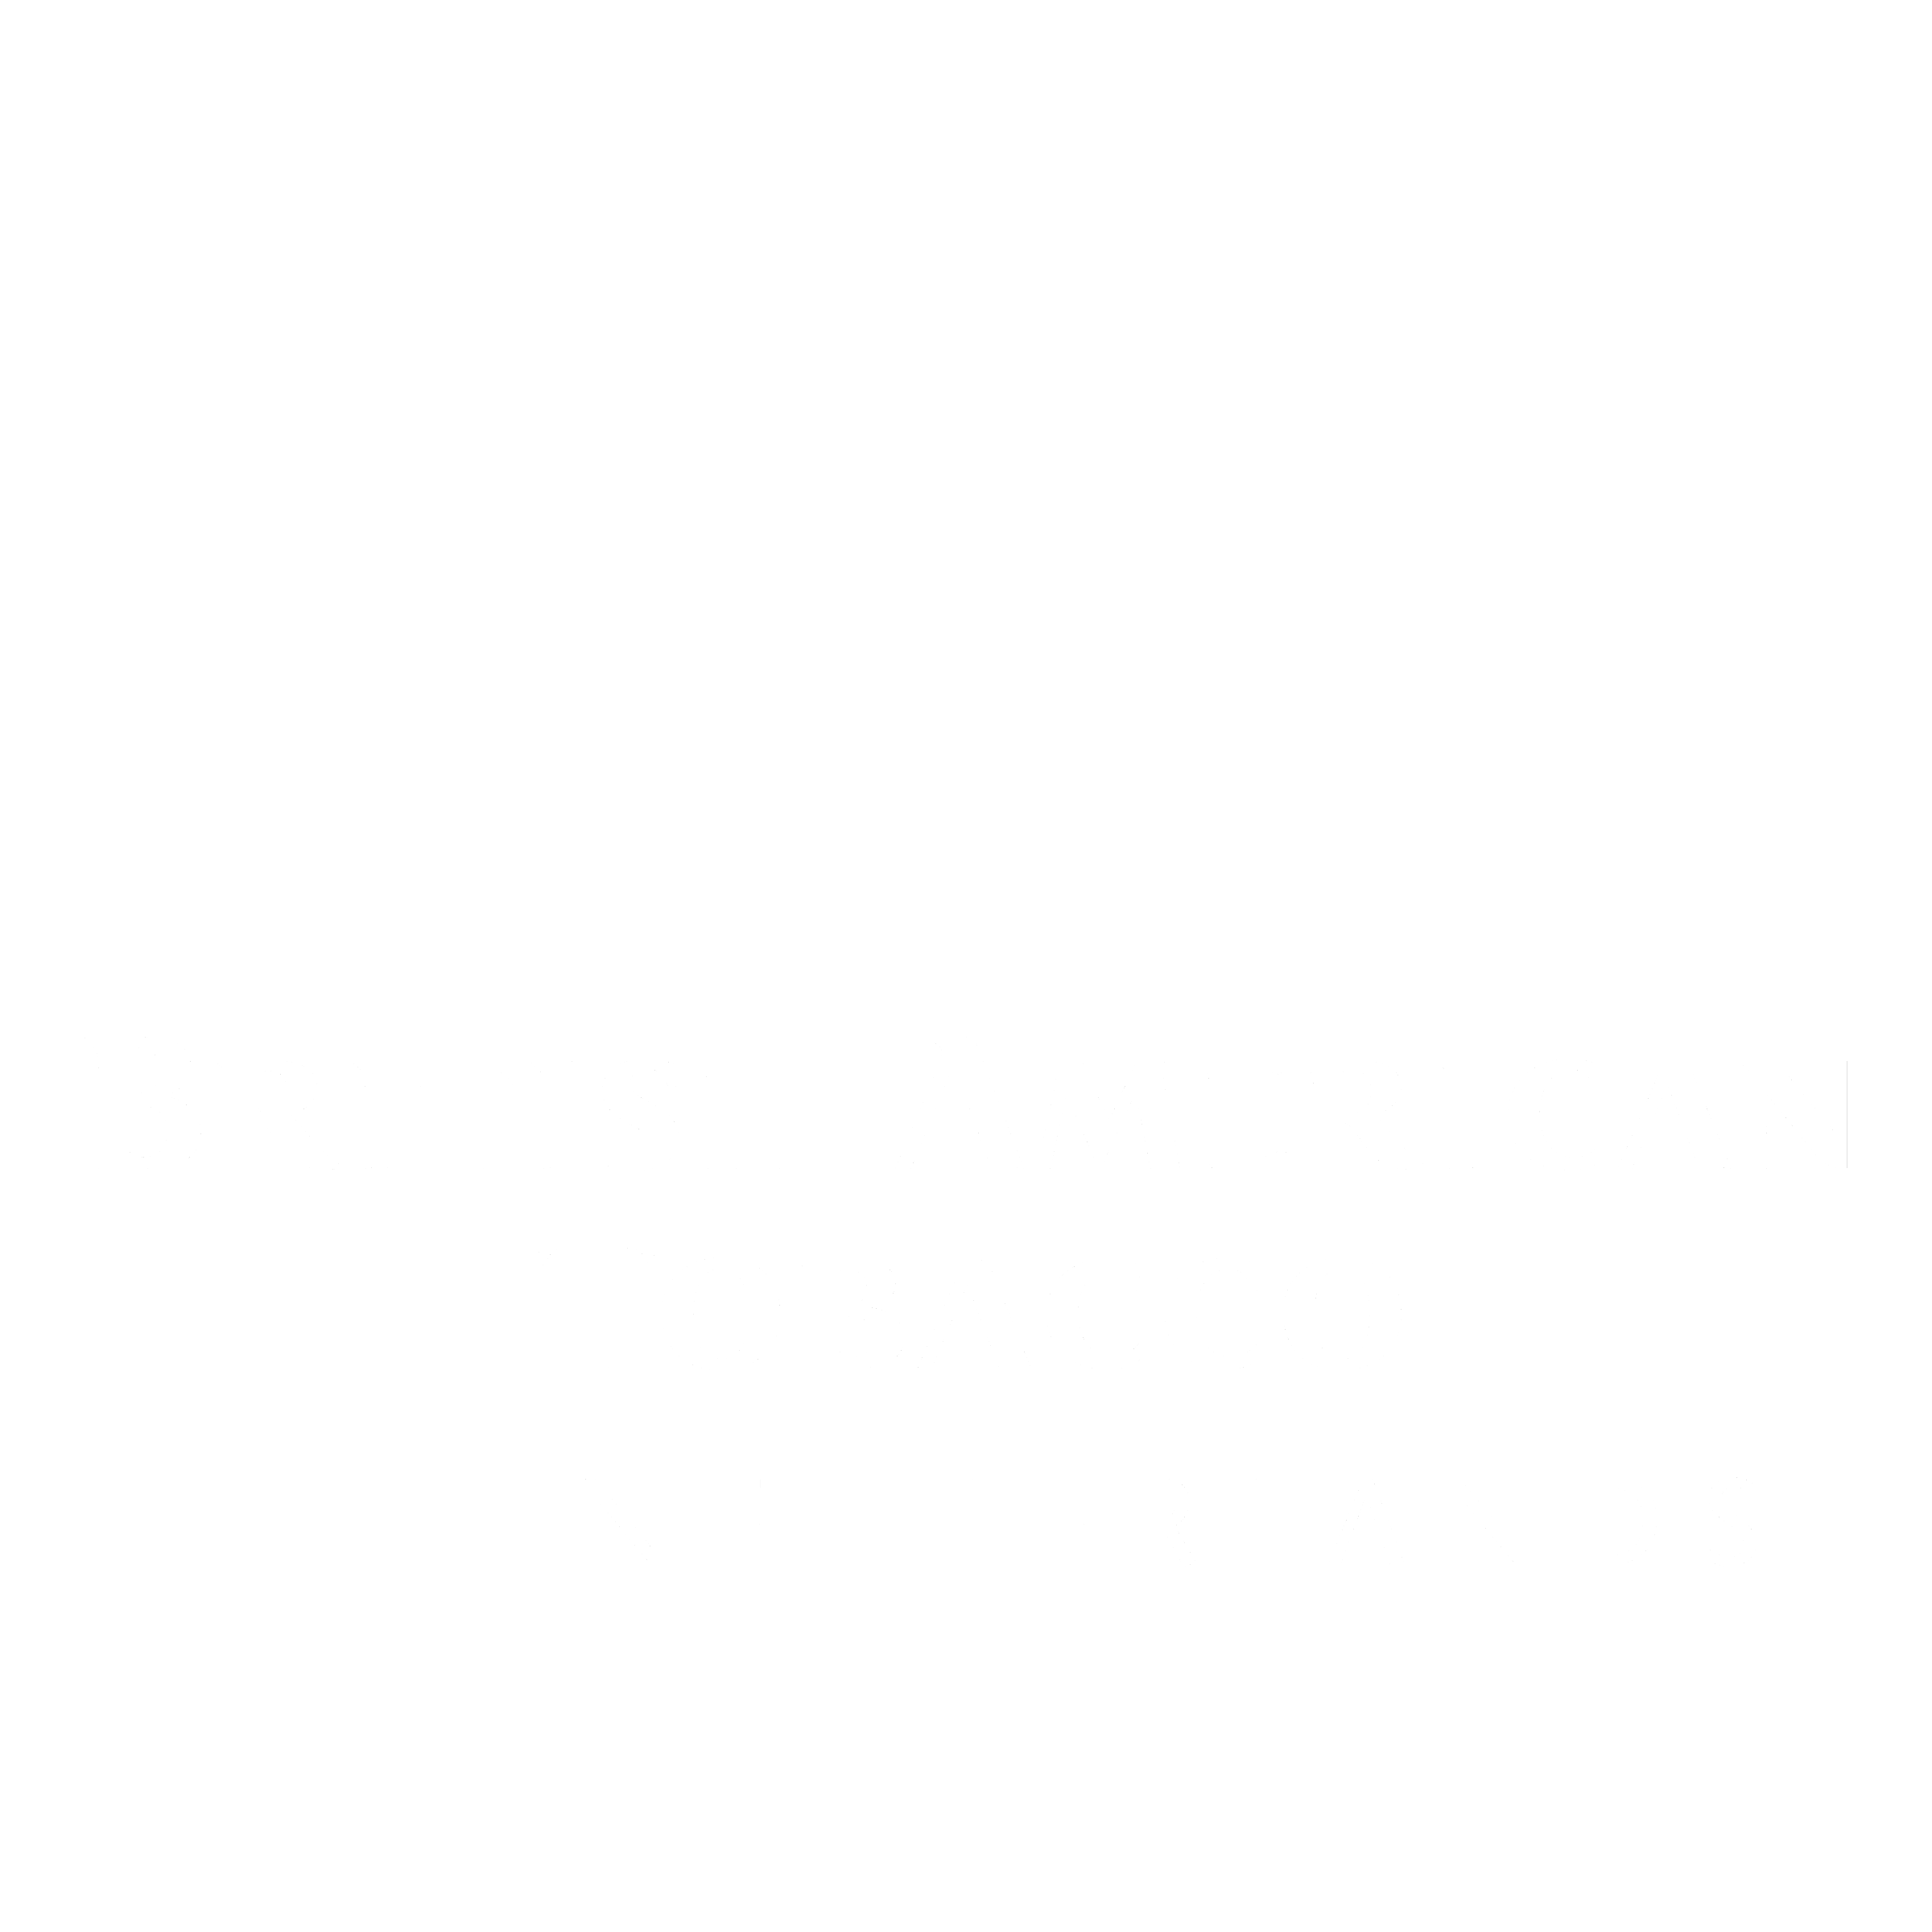 British American Tobacco Logo - British American Tobacco The Netherlands Logo PNG Transparent & SVG